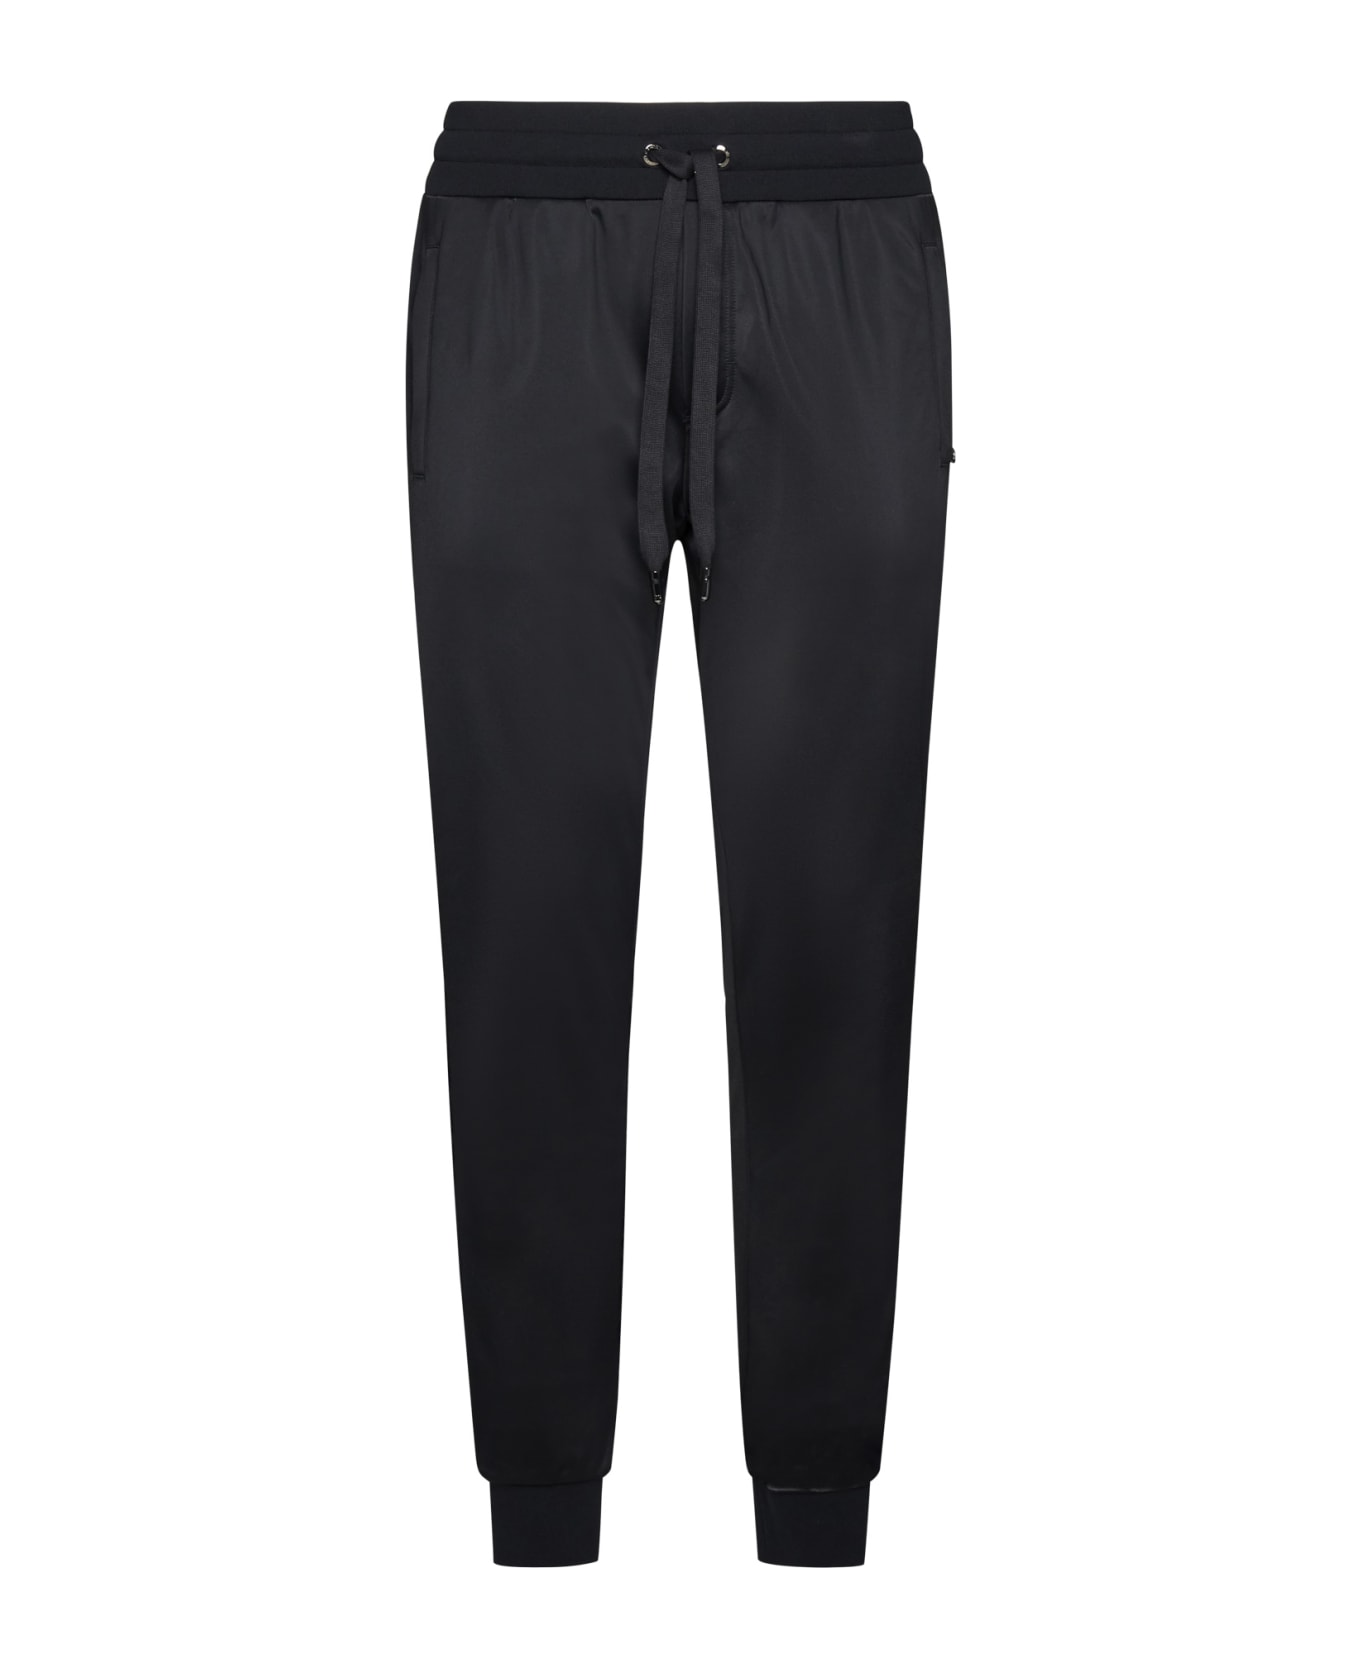 Dolce & Gabbana Pants - black スウェットパンツ